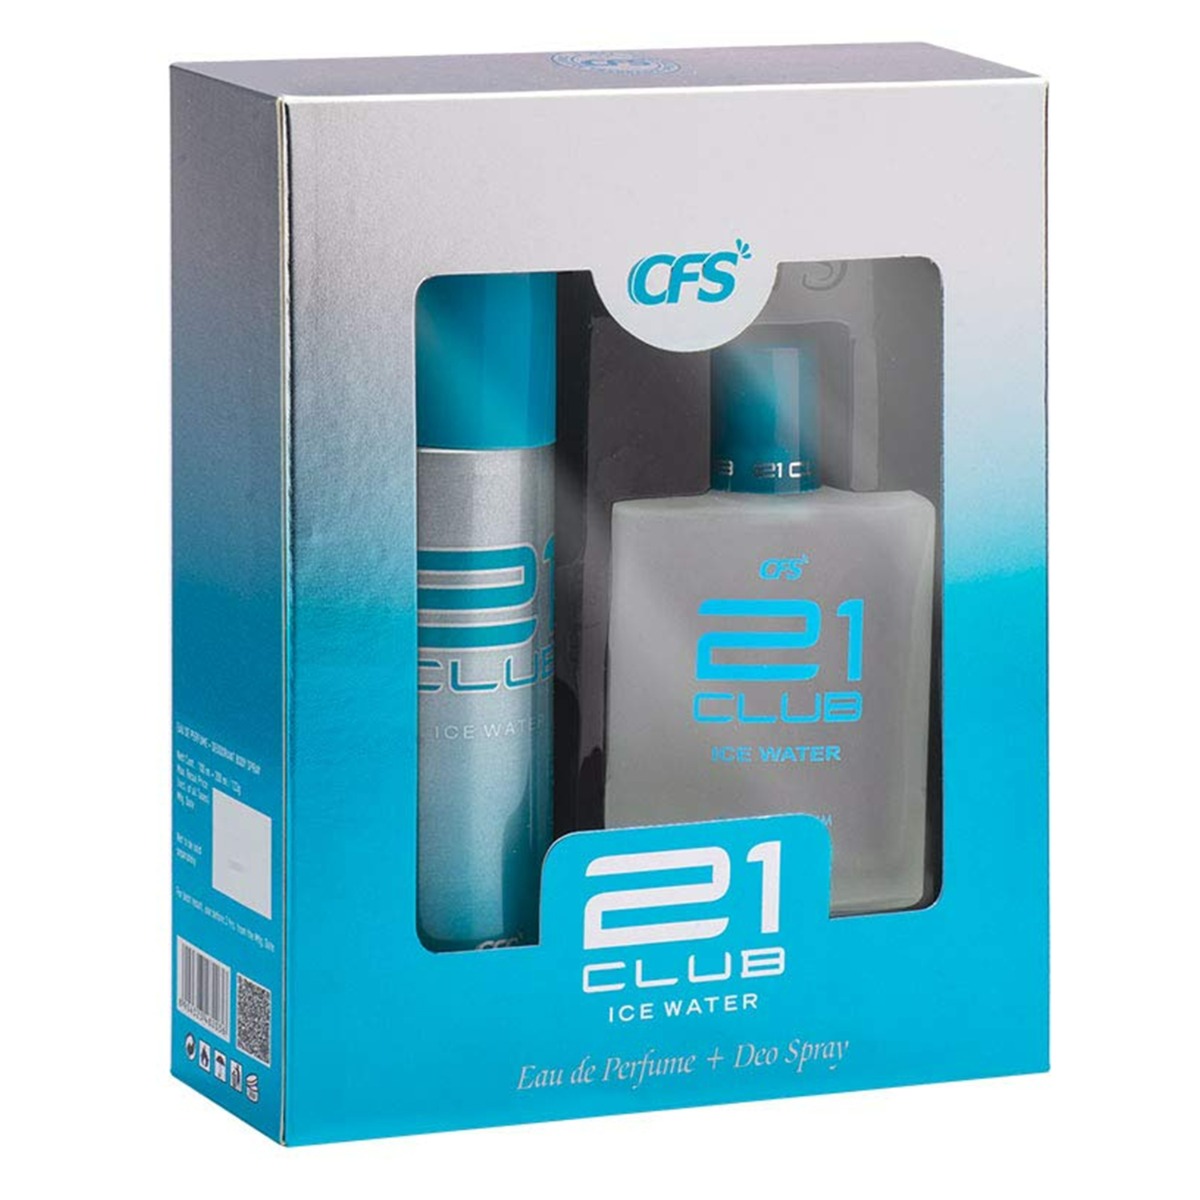 CFS 21 Club Ice Water Unisex Long Lasting Eau De Parfum And Deodorant, Combo